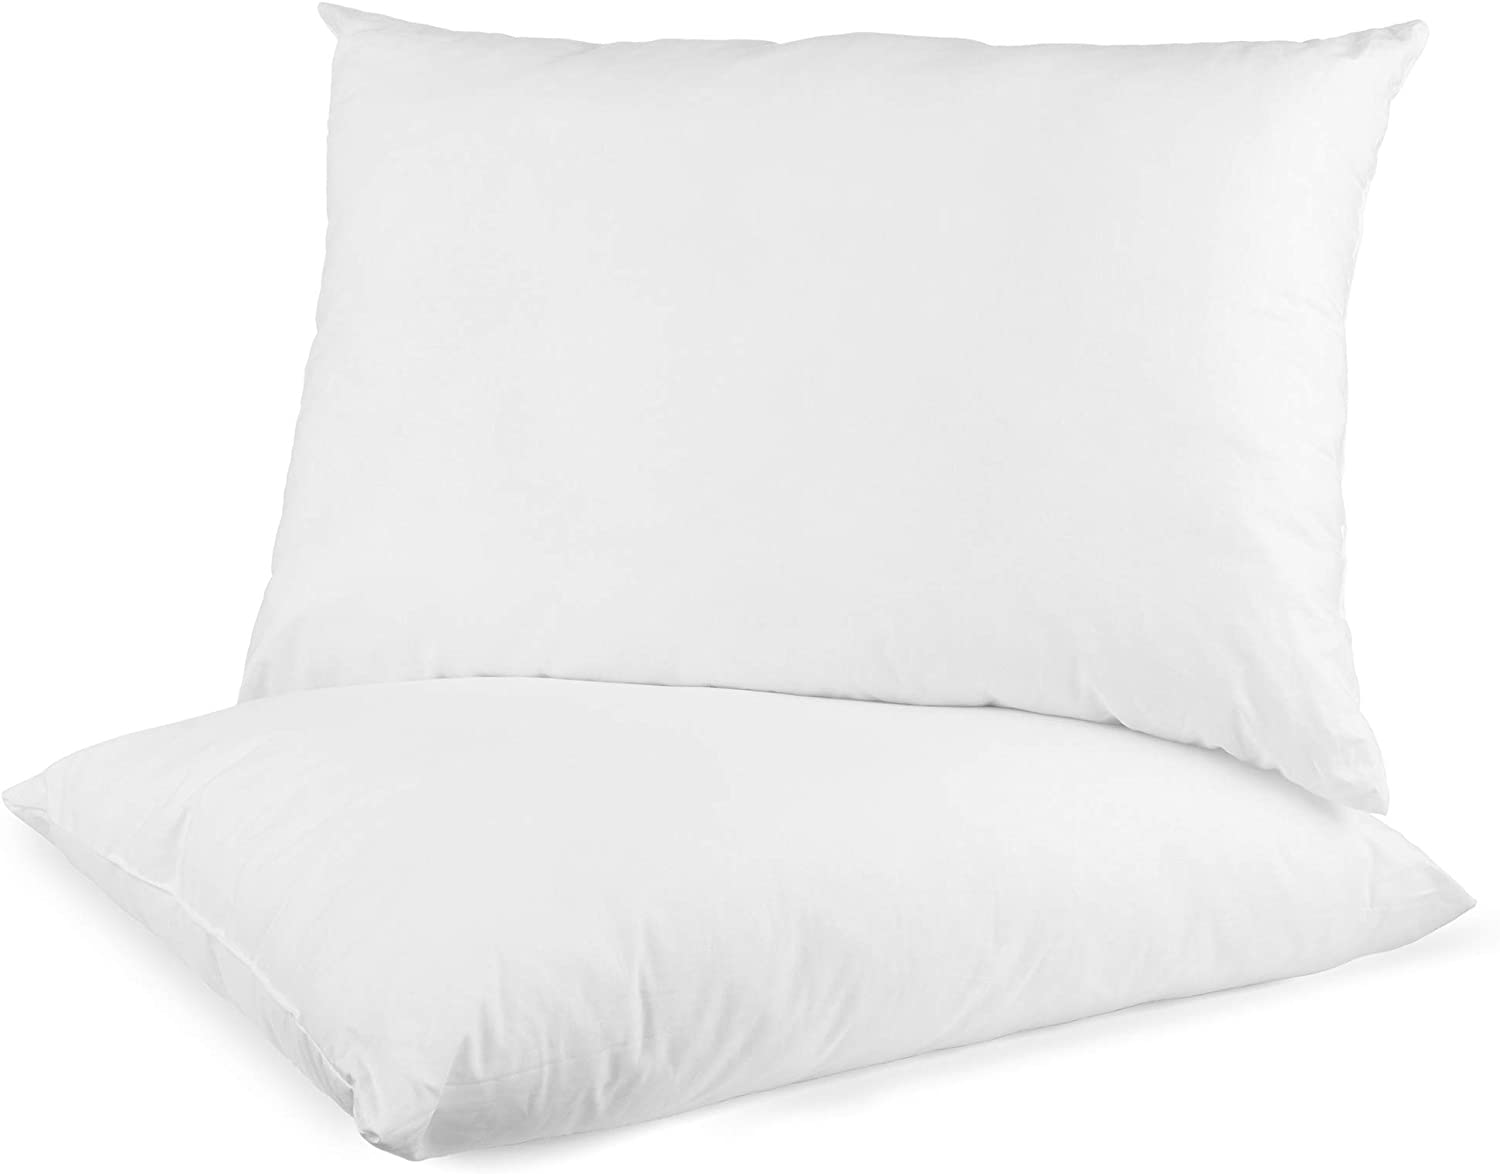 Digital Decor Down-Alternative King Size Pillows, Set Of 2